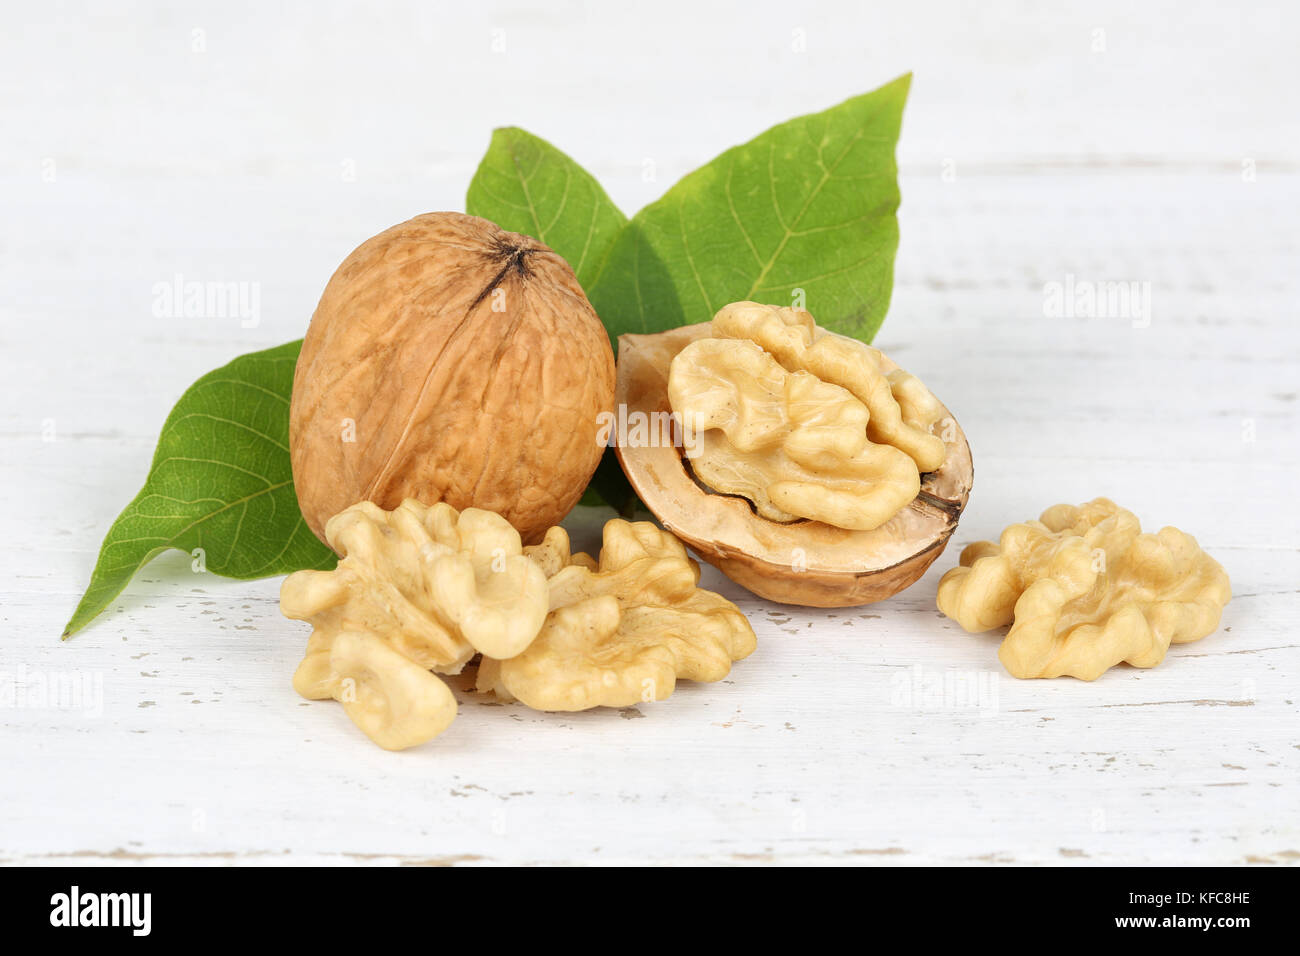 Walnuts walnut nuts nut nutshell on wooden board food Stock Photo